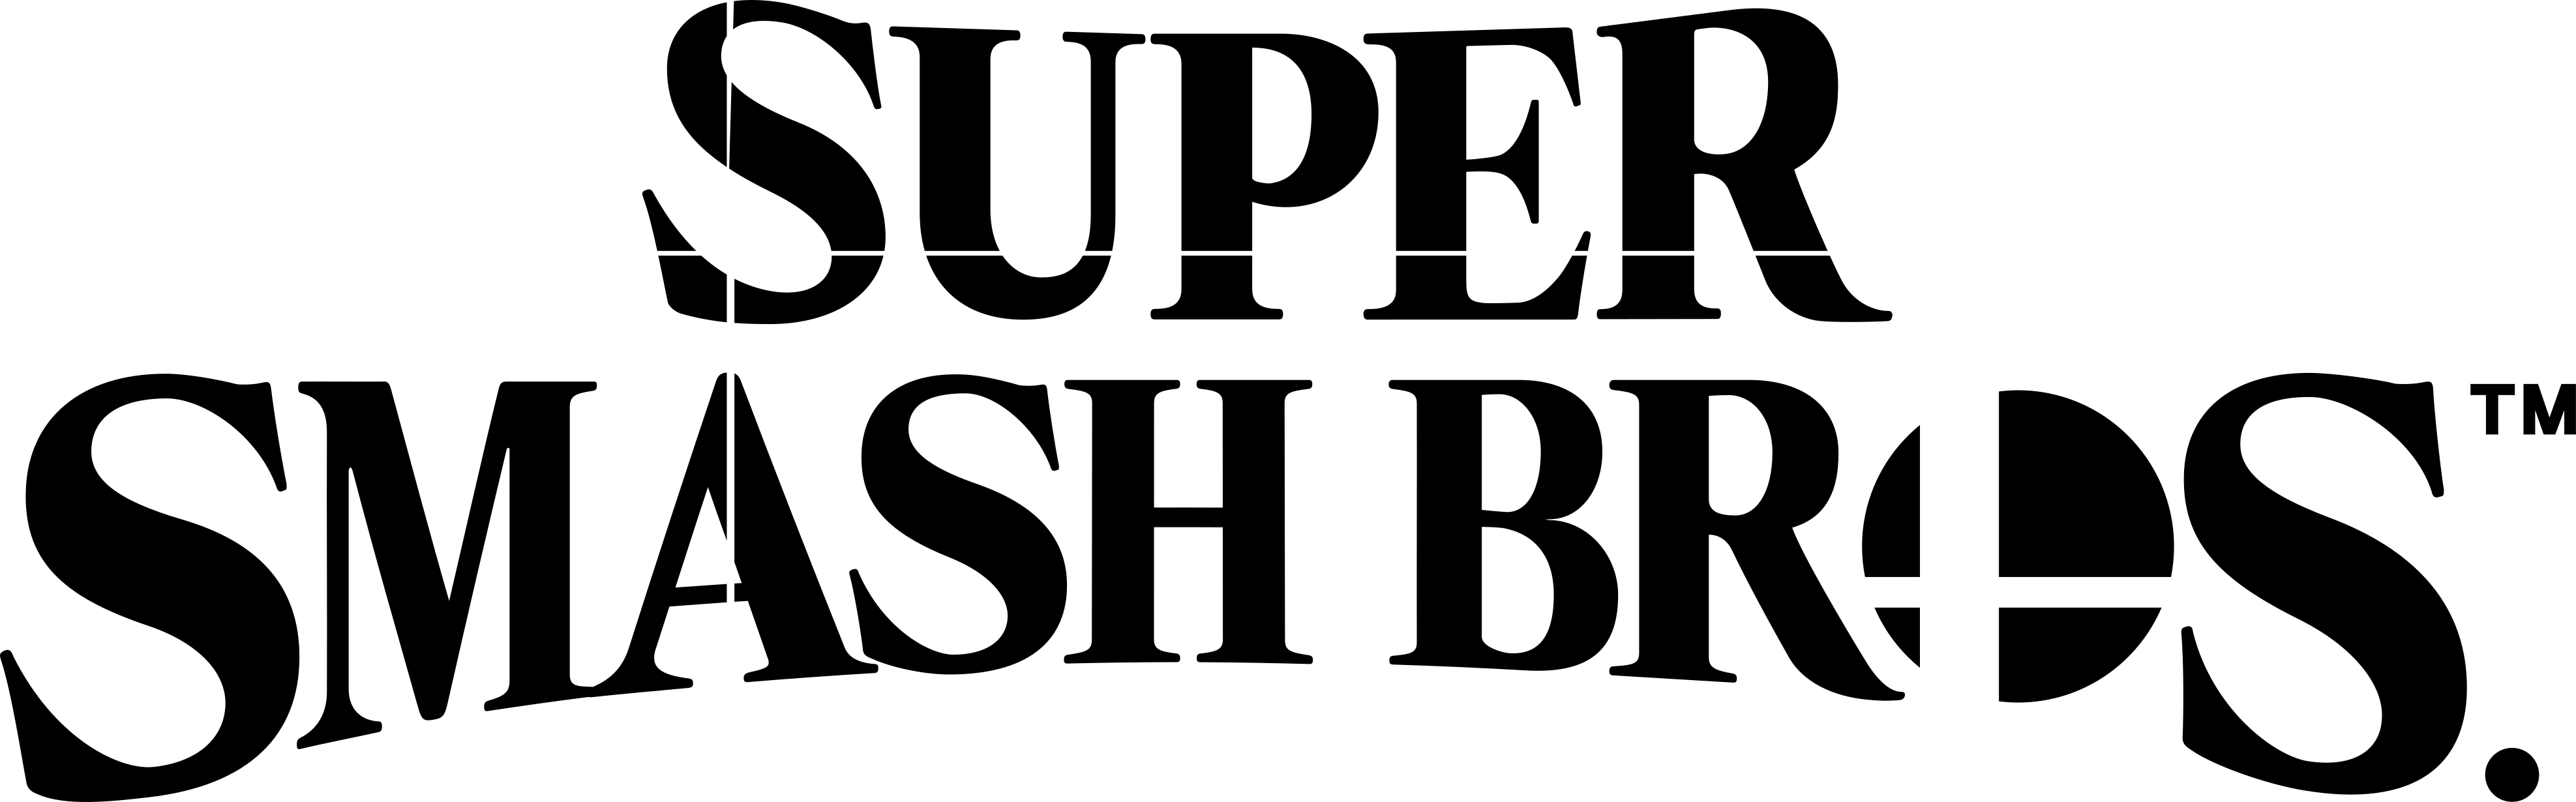 Super Smash Bros. Logo PNG -Datei